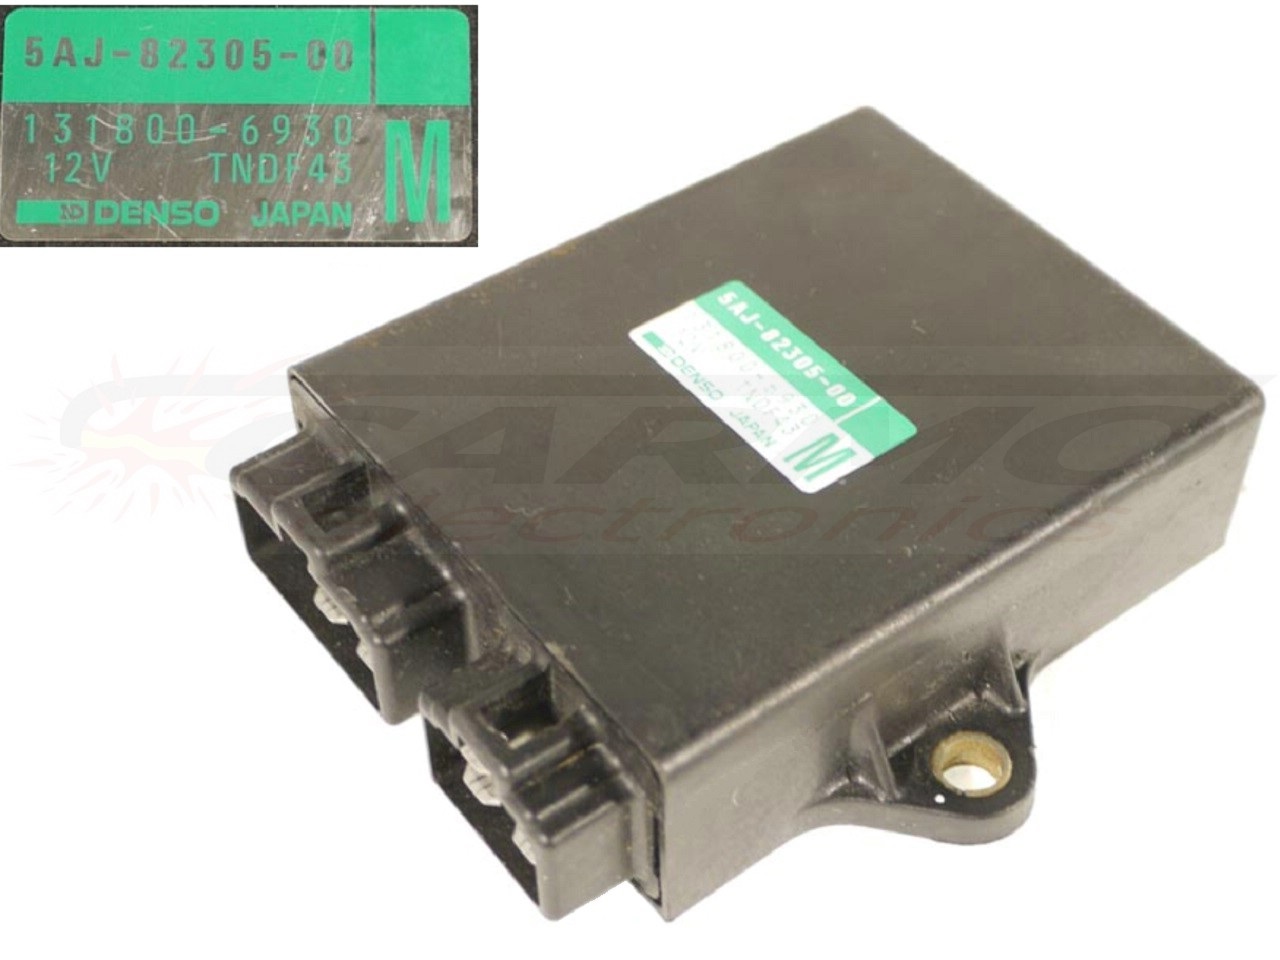 XV125 Virago TCI CDI dispositif de commande boîte noire (5AJ-82305-00, 131800-6930) 1997-2000